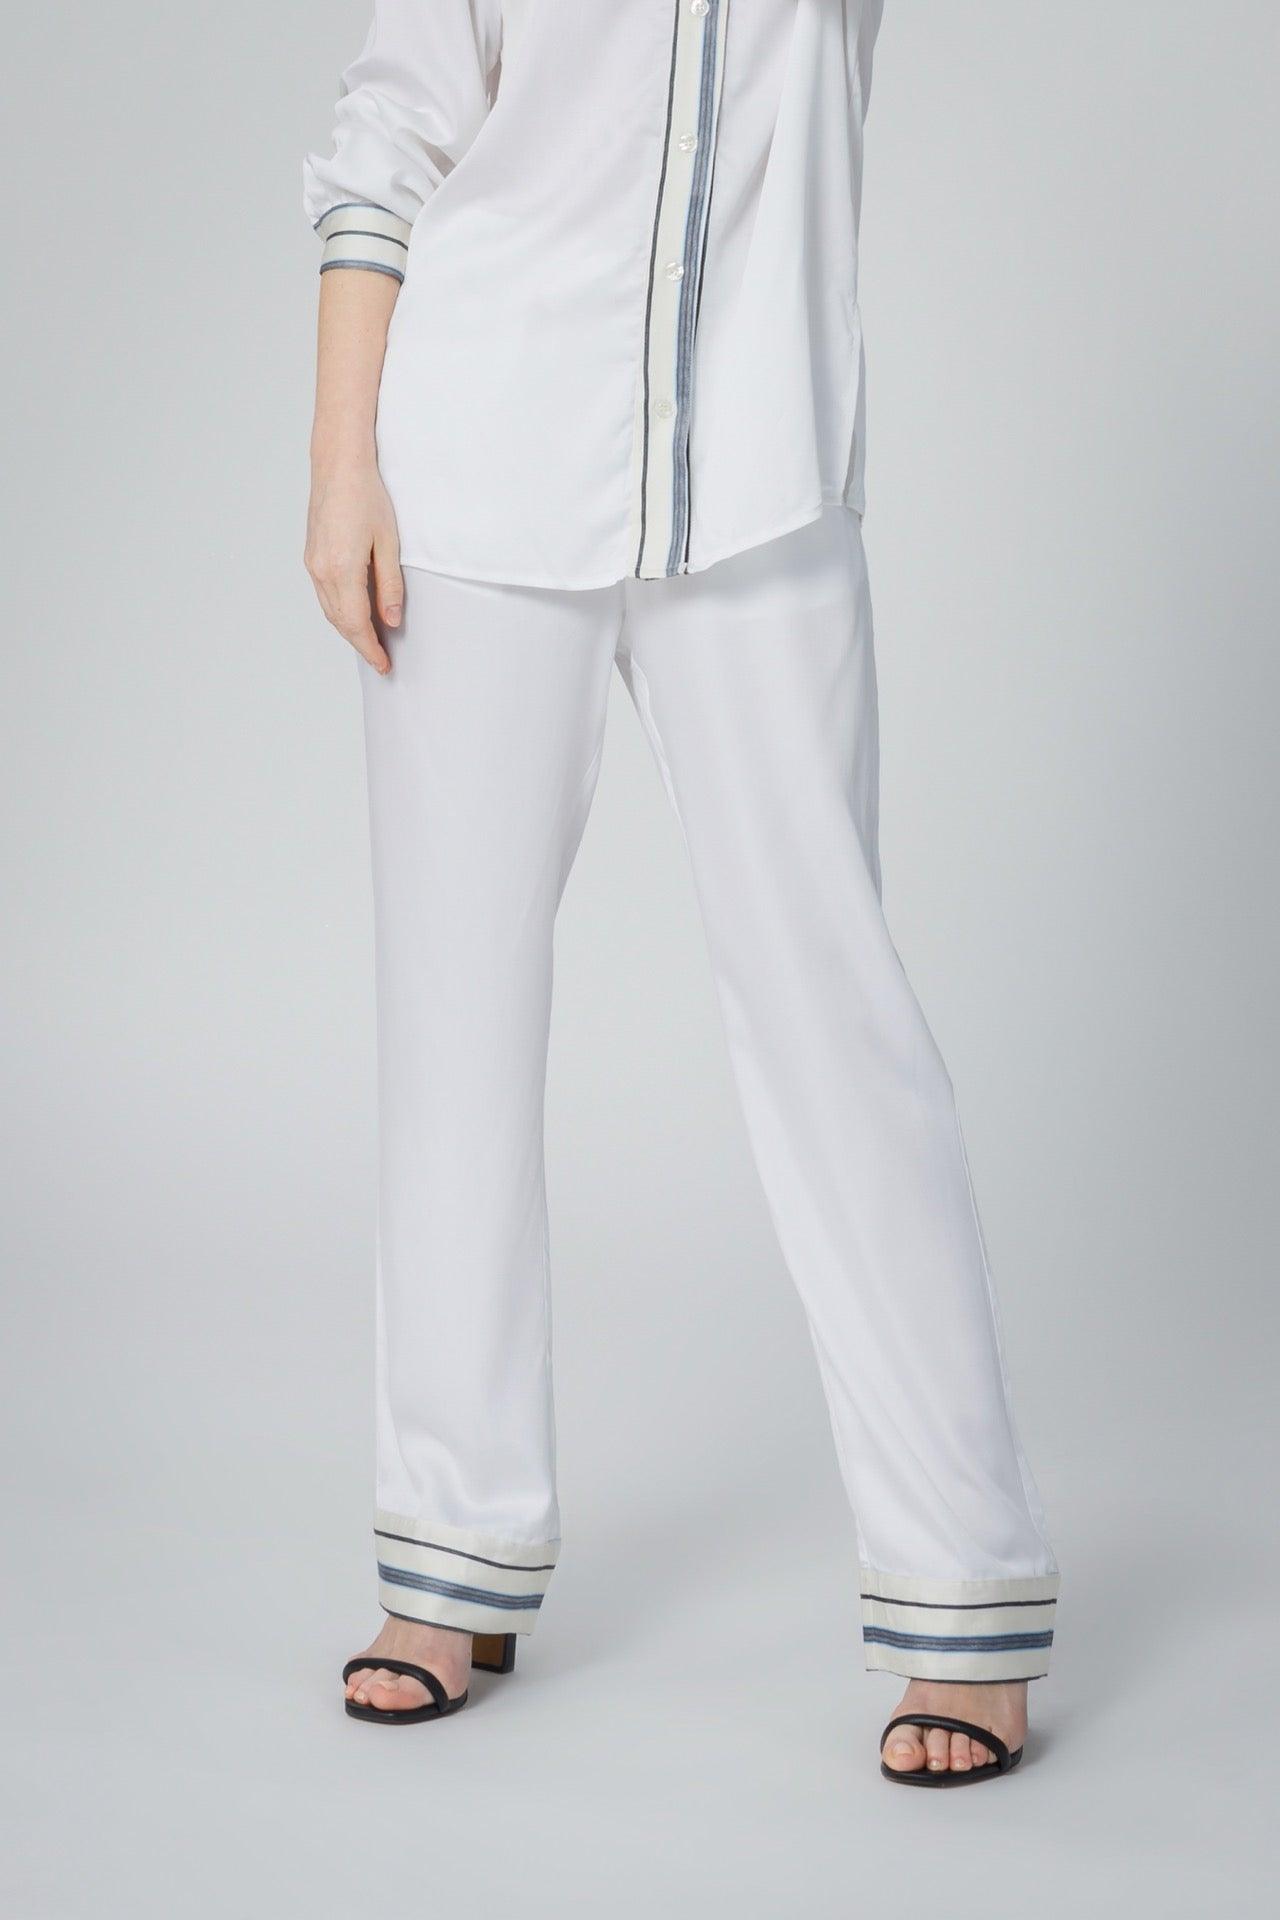 Women's Stripe Inset Pajama Pants - NOT LABELED